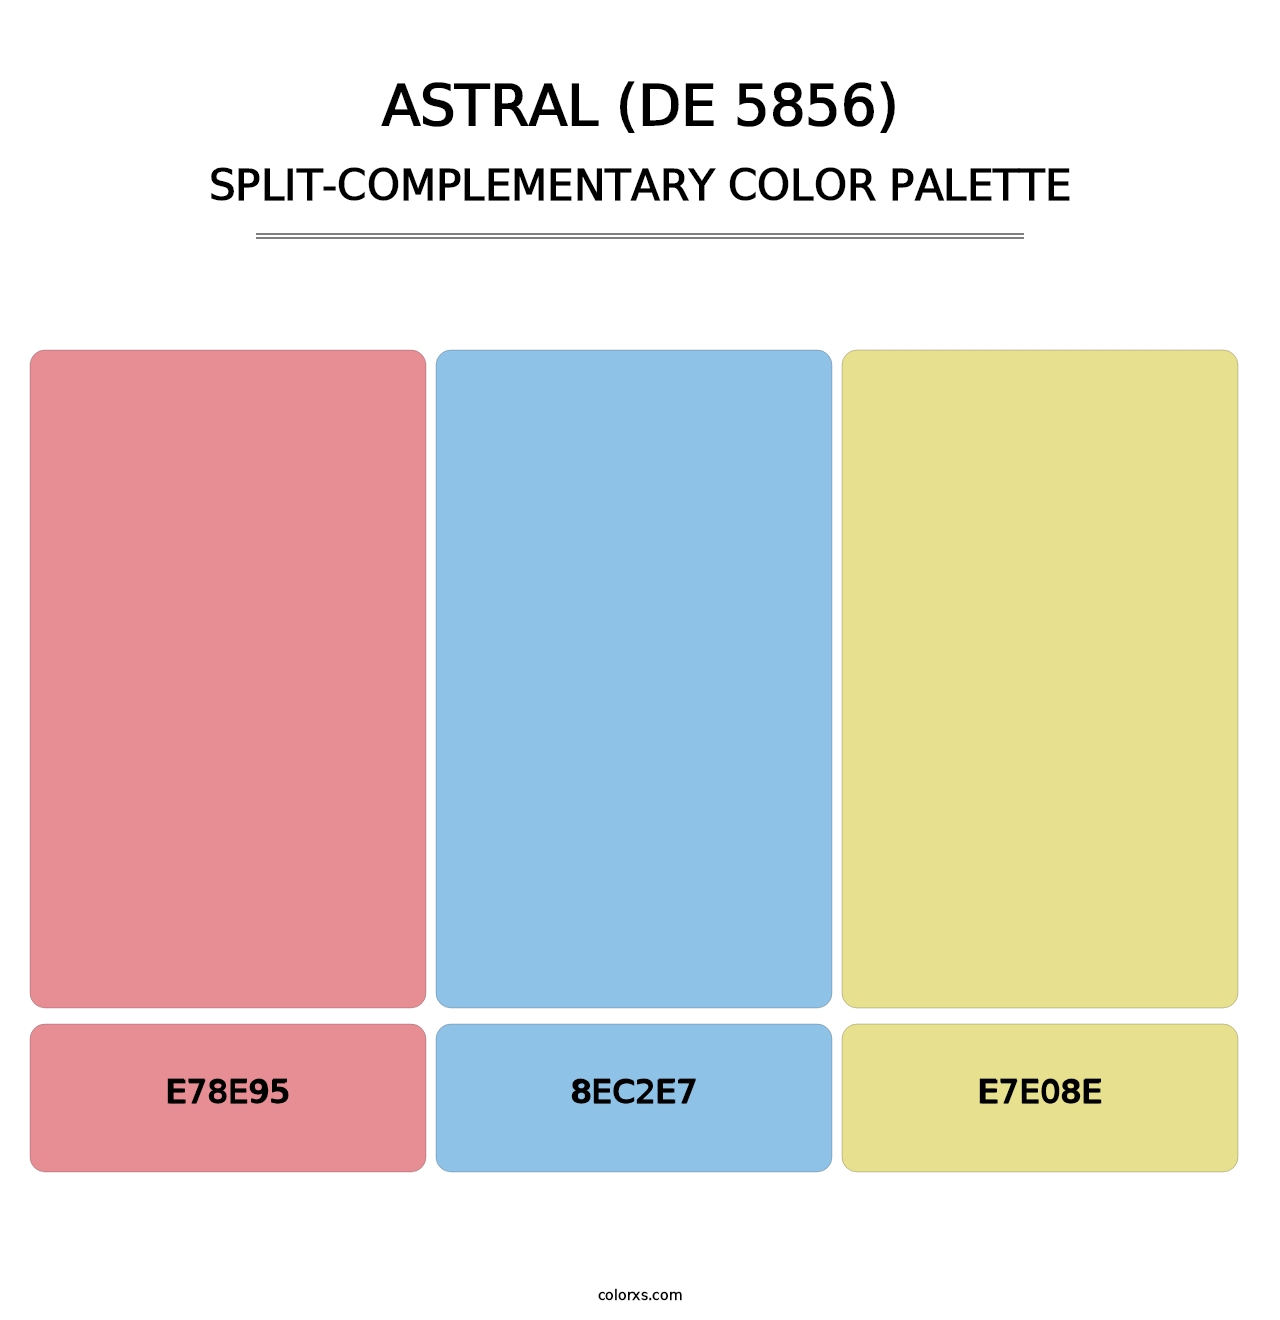 Astral (DE 5856) - Split-Complementary Color Palette